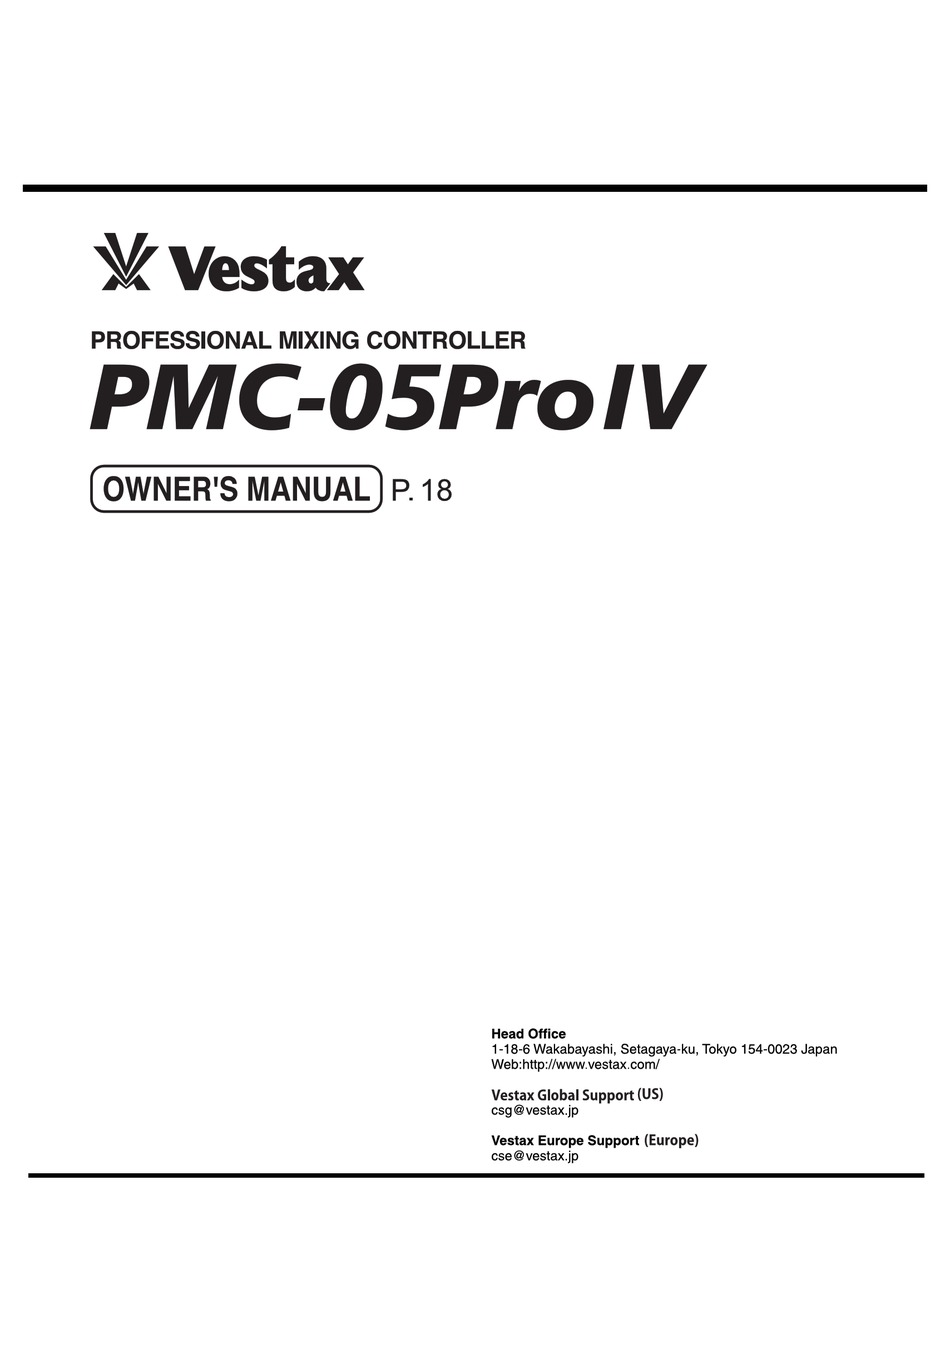 VESTAX PMC-05PROIV OWNER'S MANUAL Pdf Download | ManualsLib